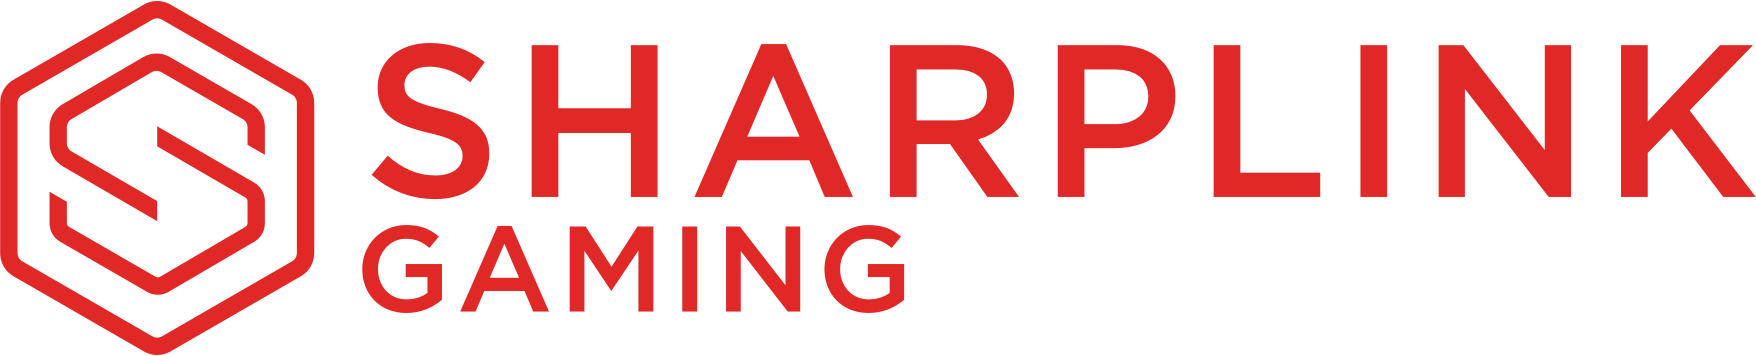 SharpLink Gaming Ltd., Wednesday, November 9, 2022, Press release picture